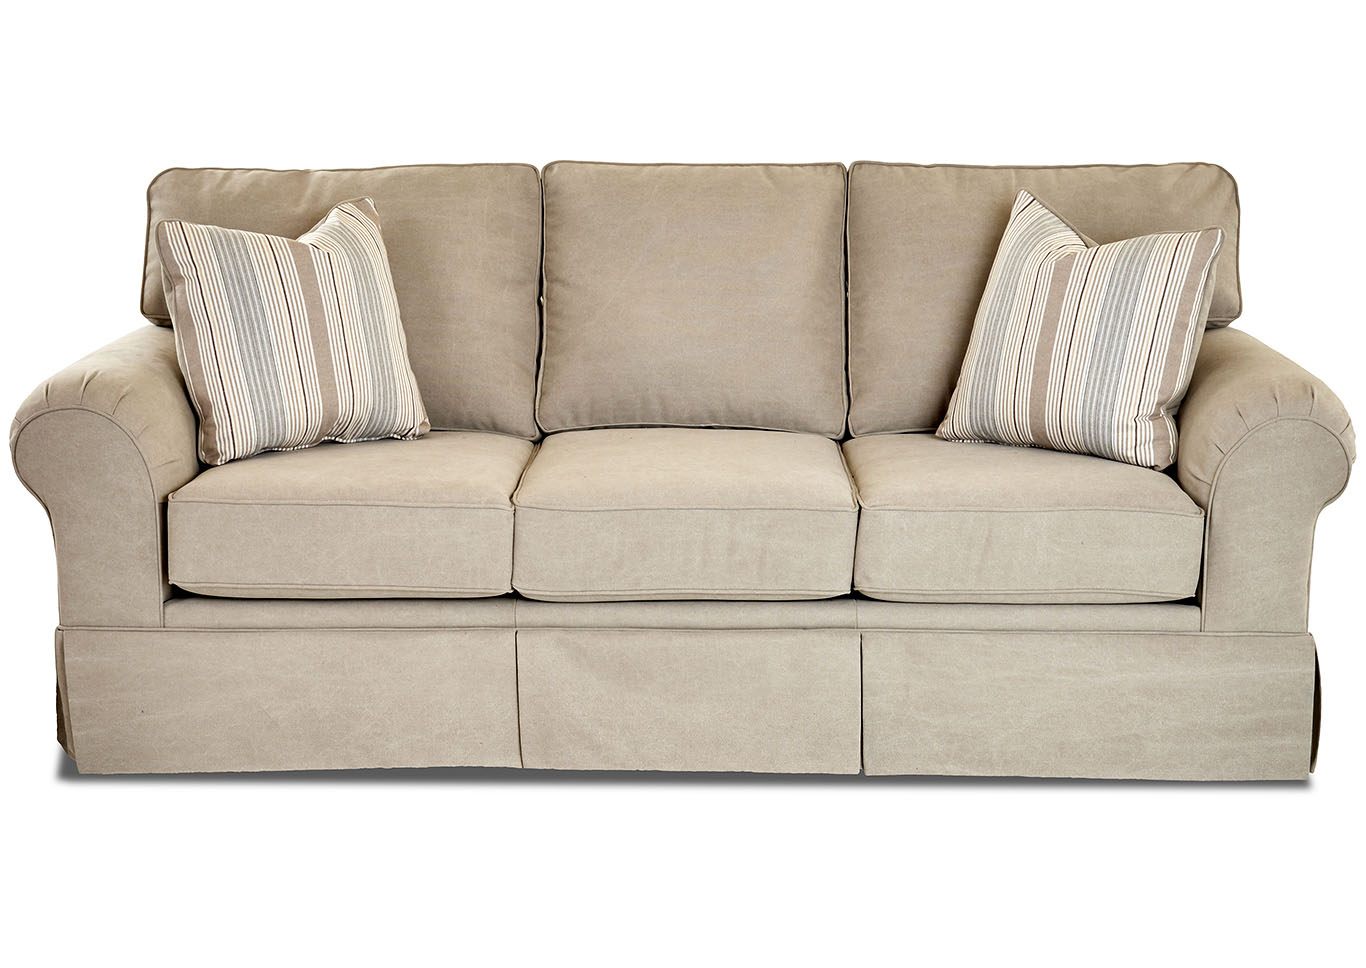 Woodwin Tibby Linen Fabric Sofa,Klaussner Home Furnishings